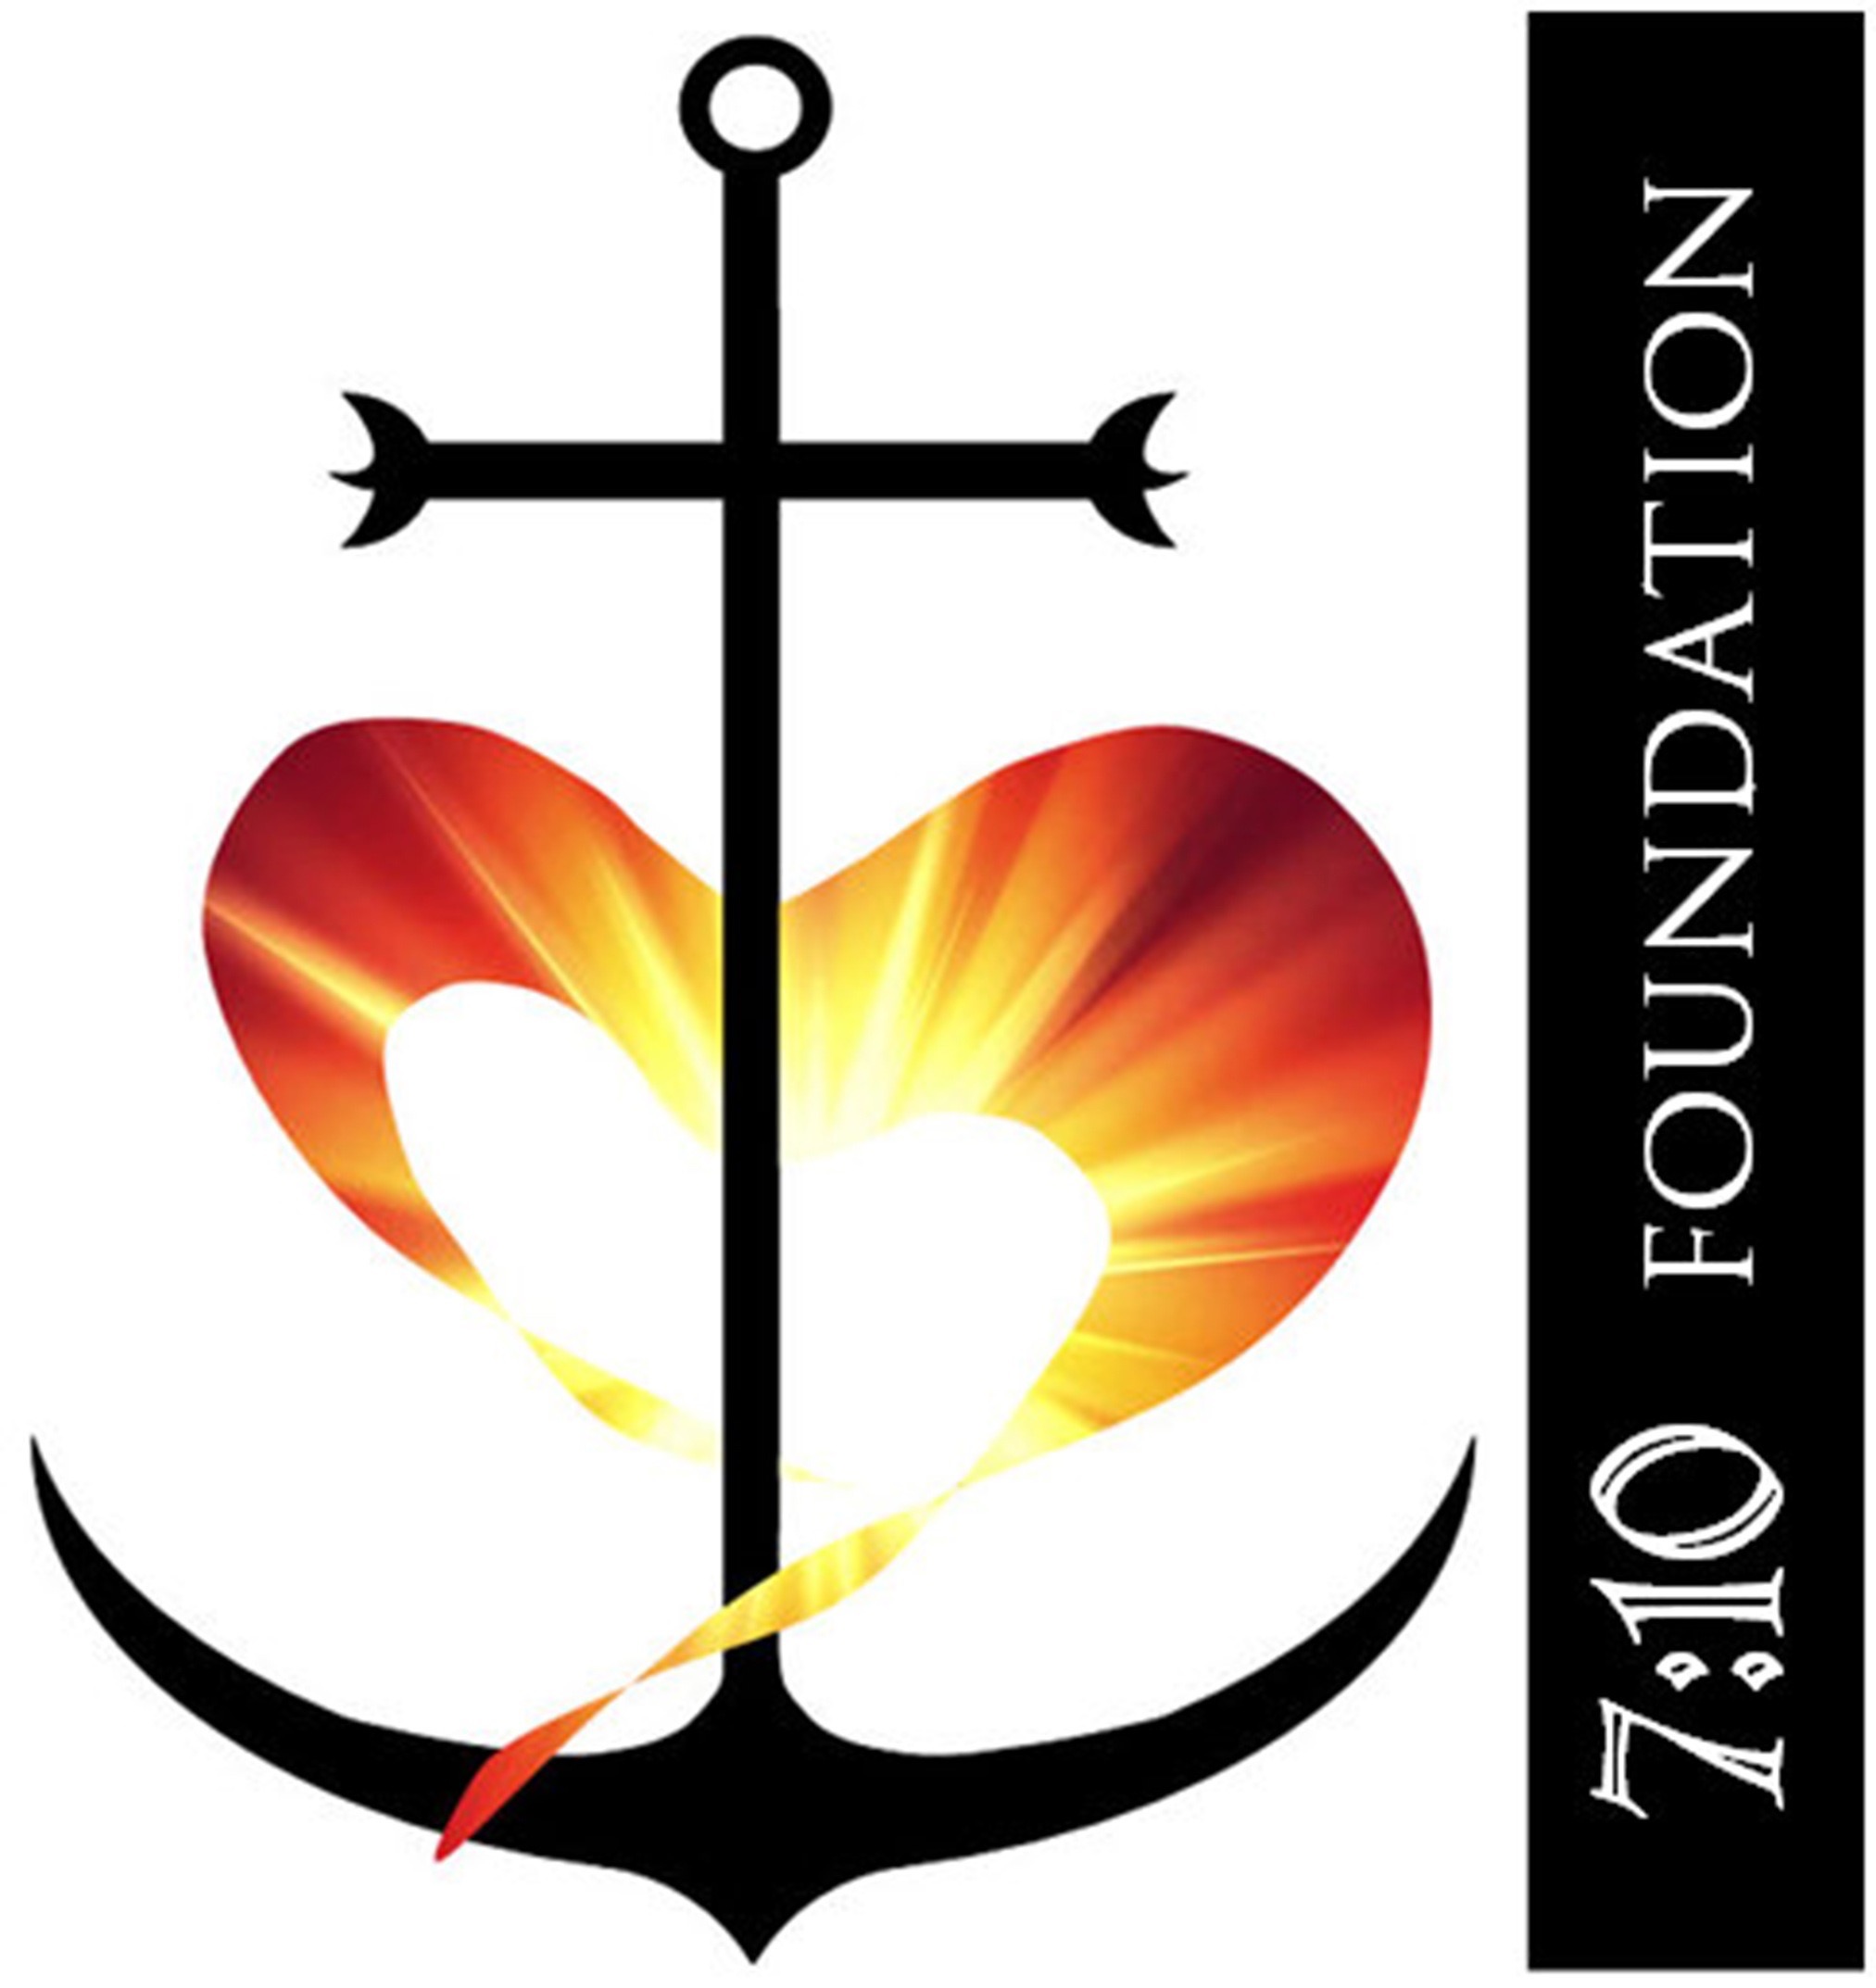 7:10 Foundation logo